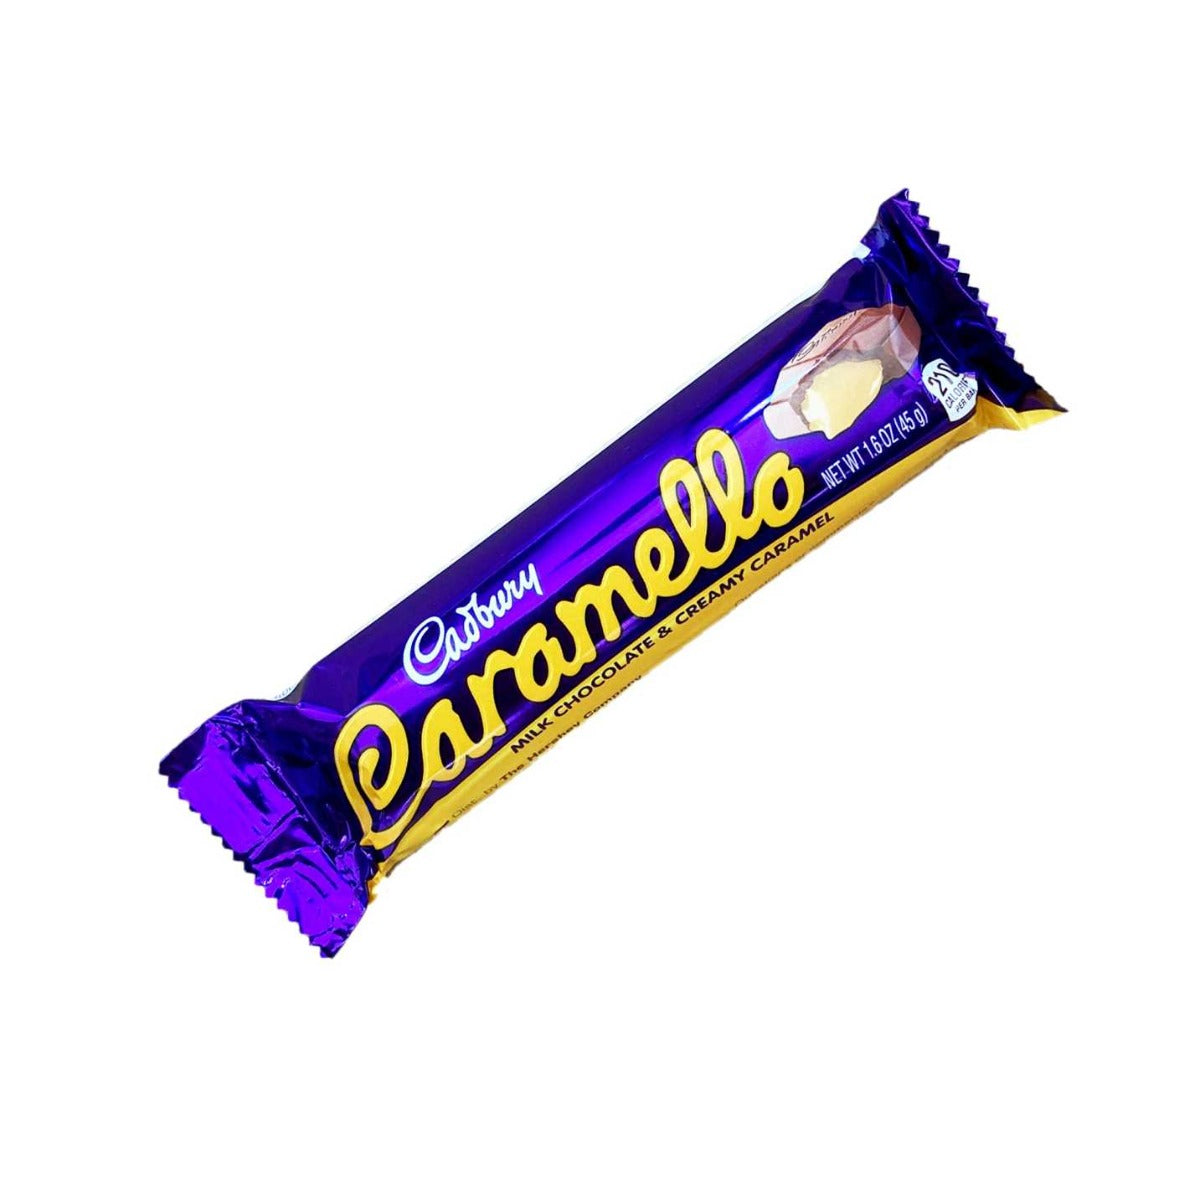 Cadbury caramello - קדבורי קרמלו - טעימים